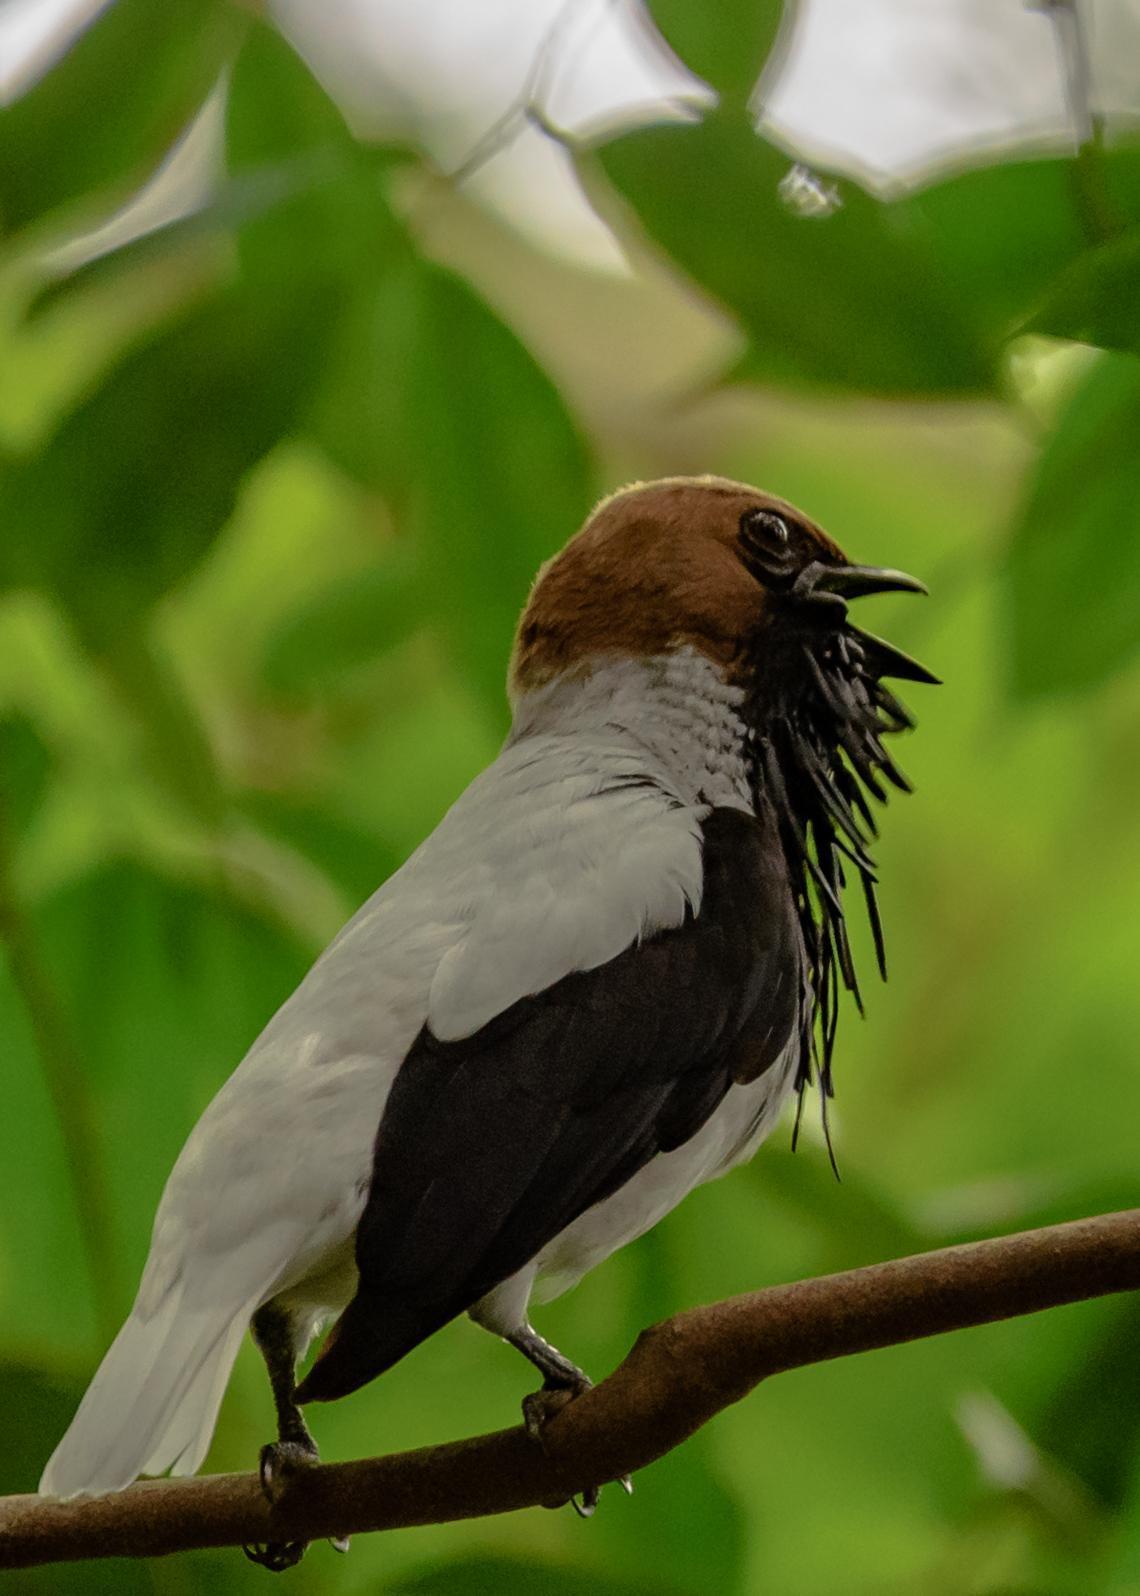 Bearded Bellbird Photo by Keshava Mysore